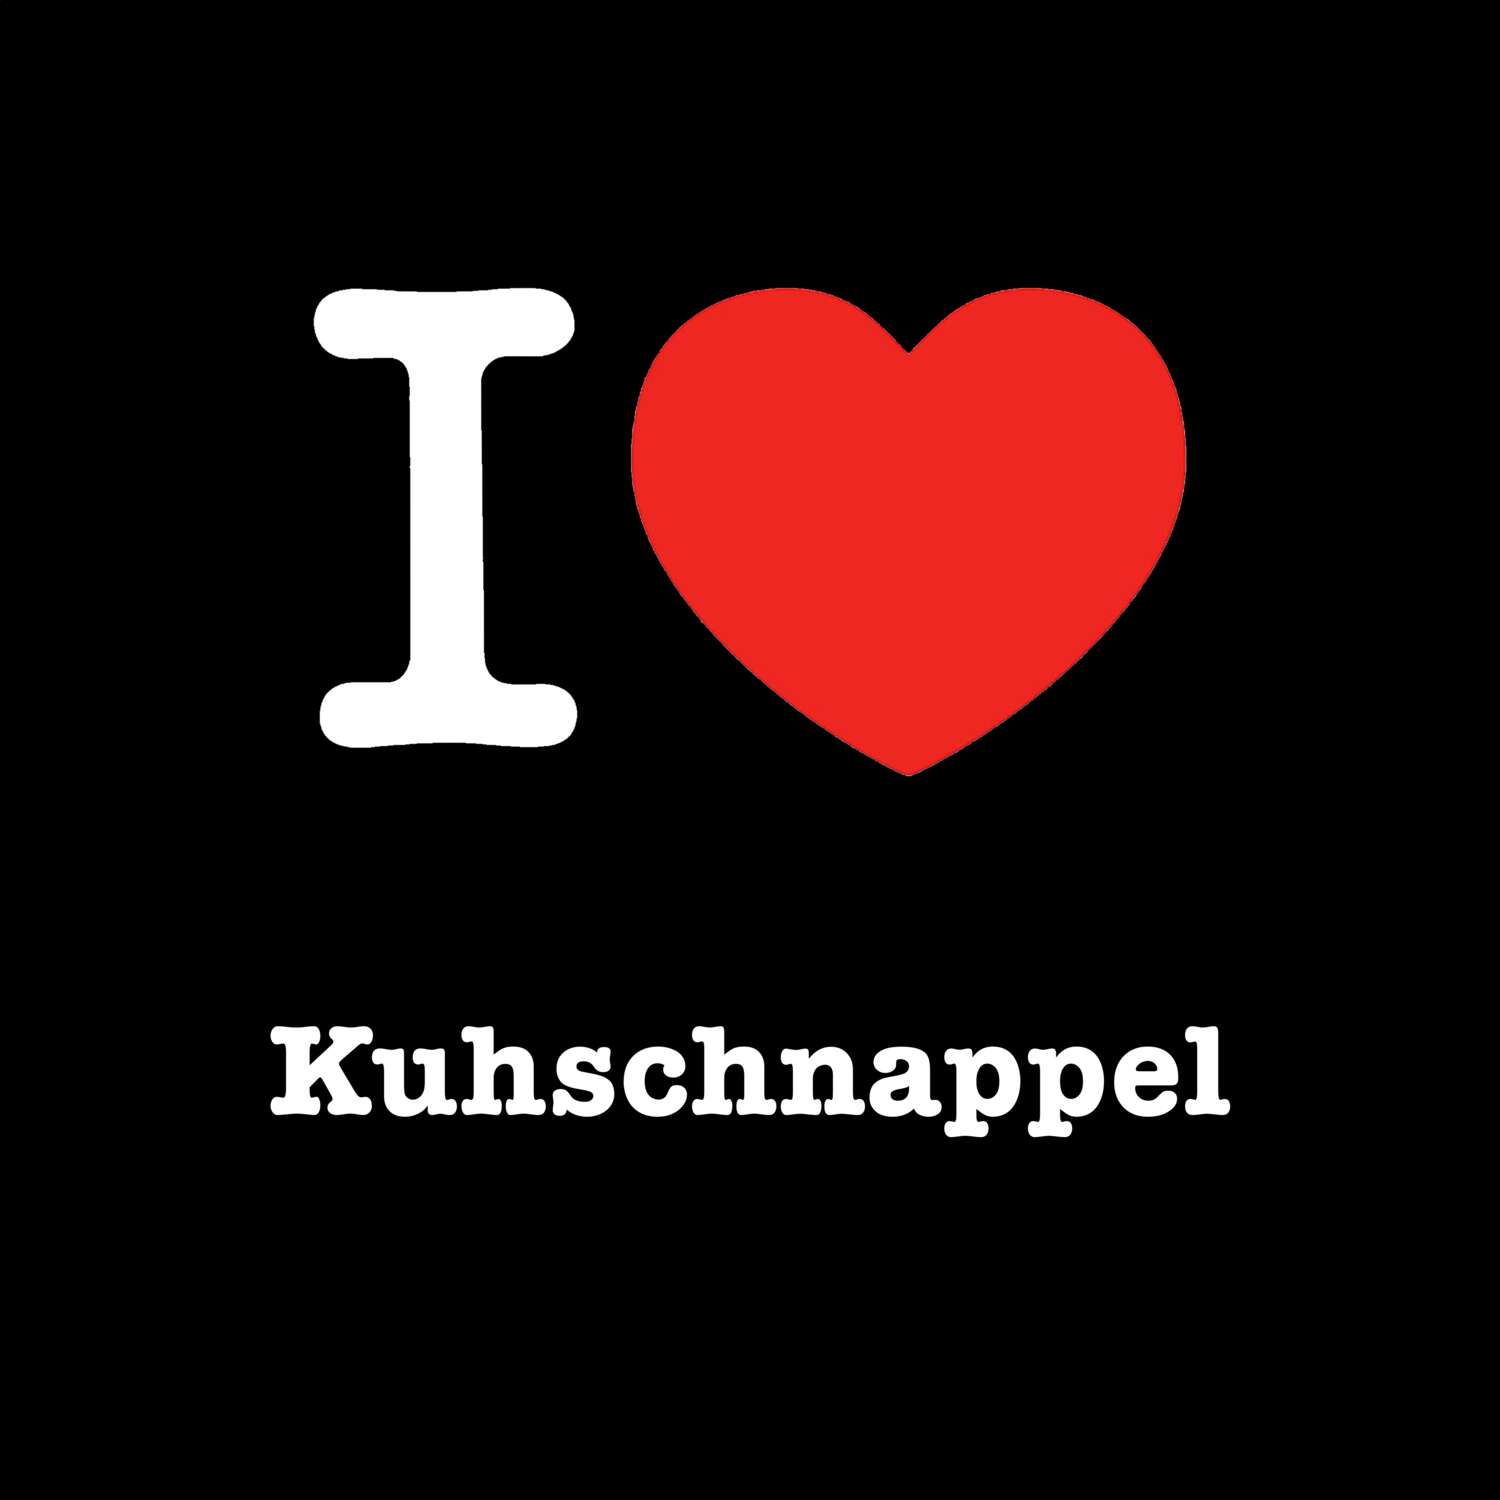 Kuhschnappel T-Shirt »I love«